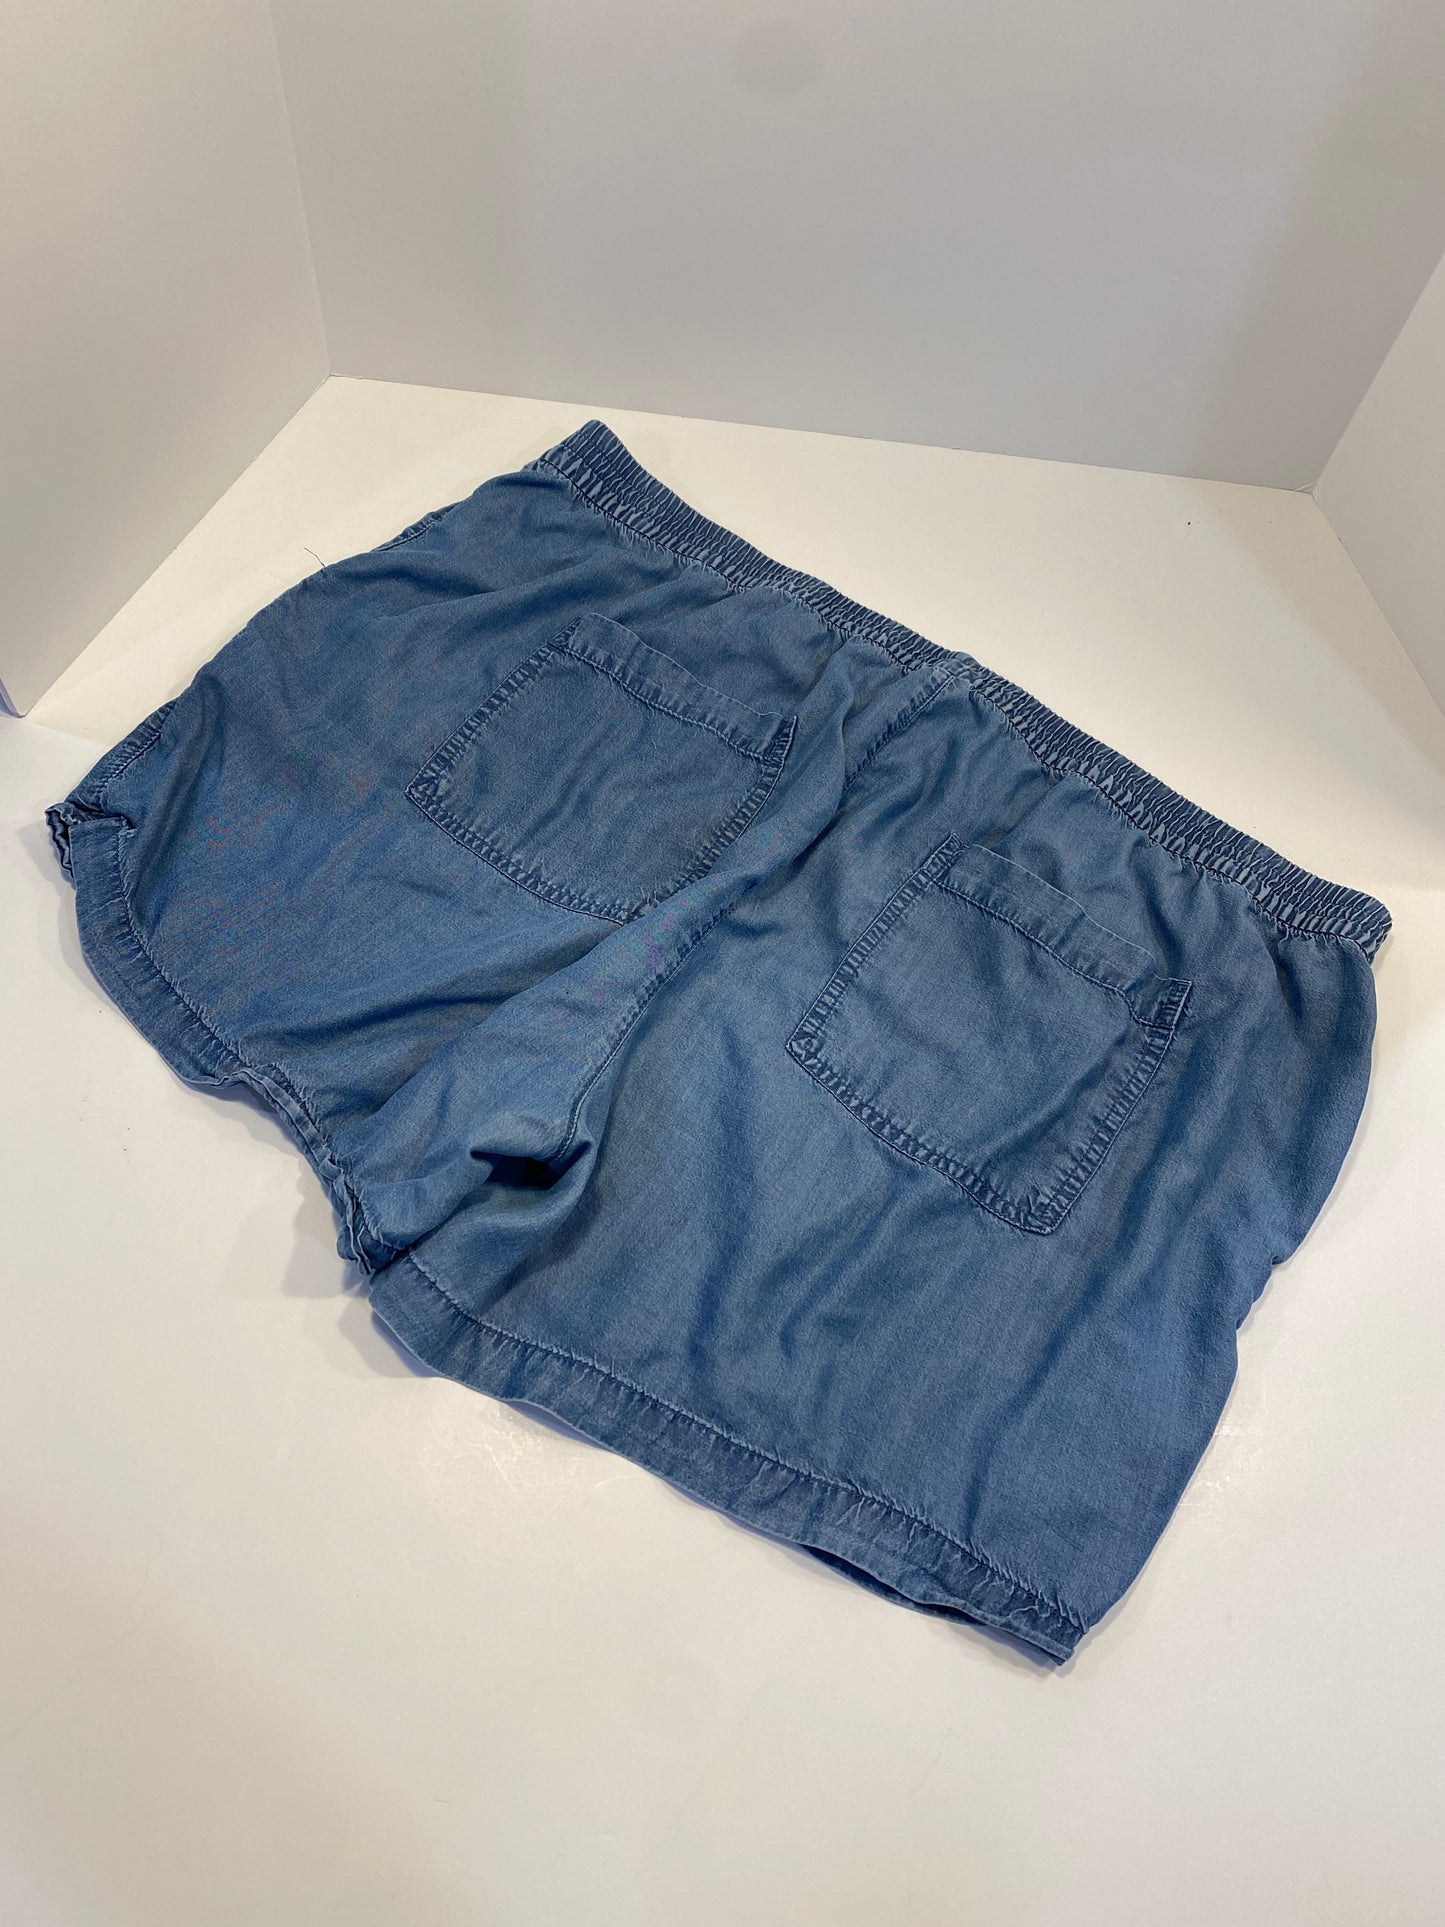 Blue Shorts Old Navy, Size Xxl